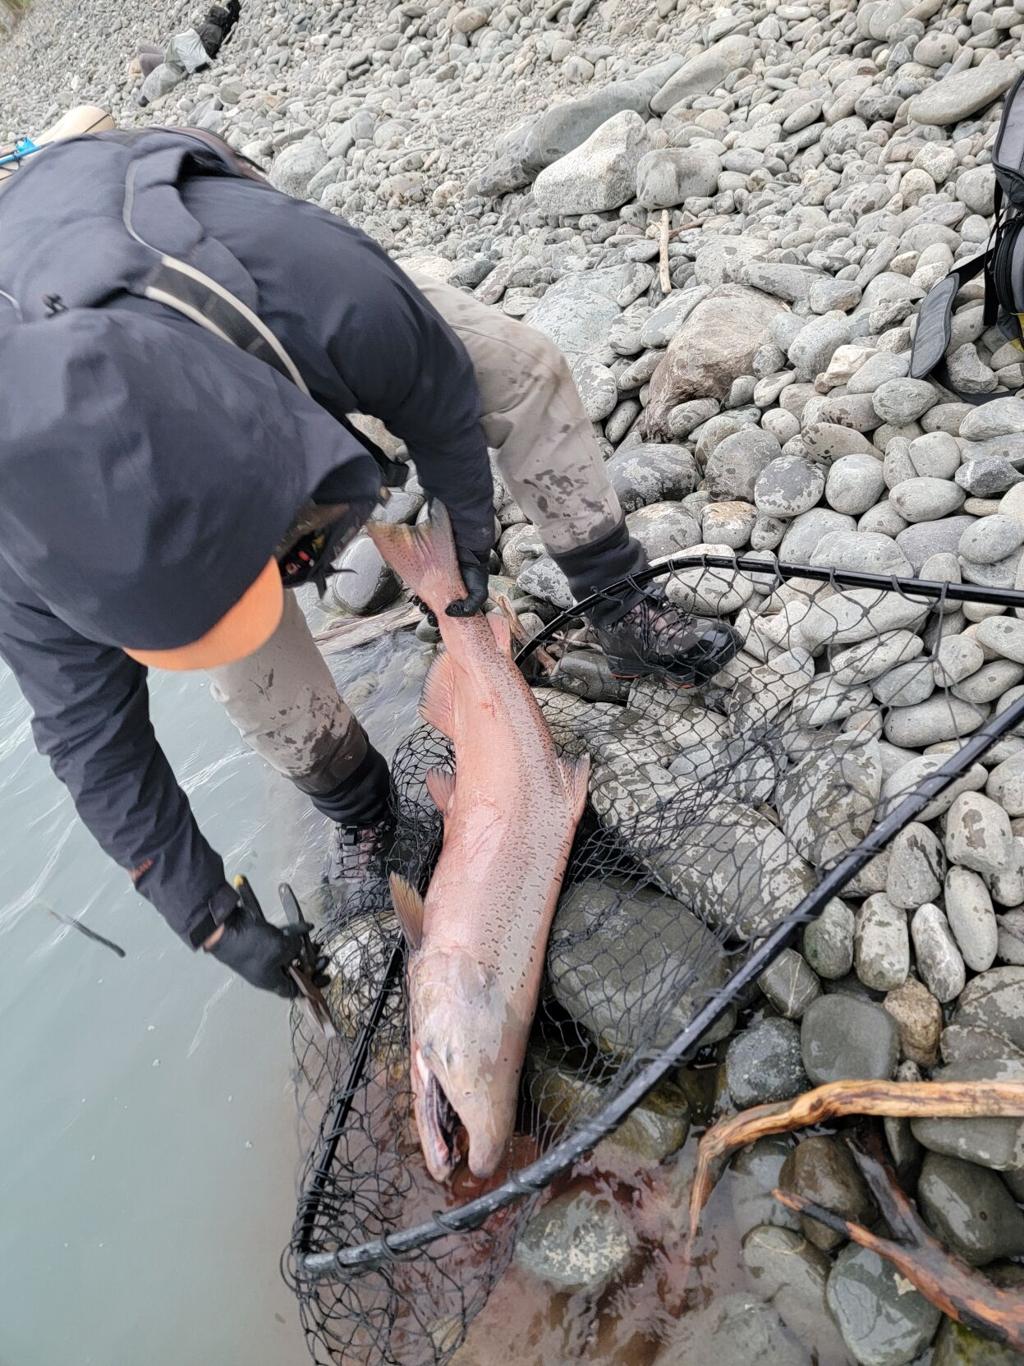 Mackenthun: Alaskan river fishing provides great challenge